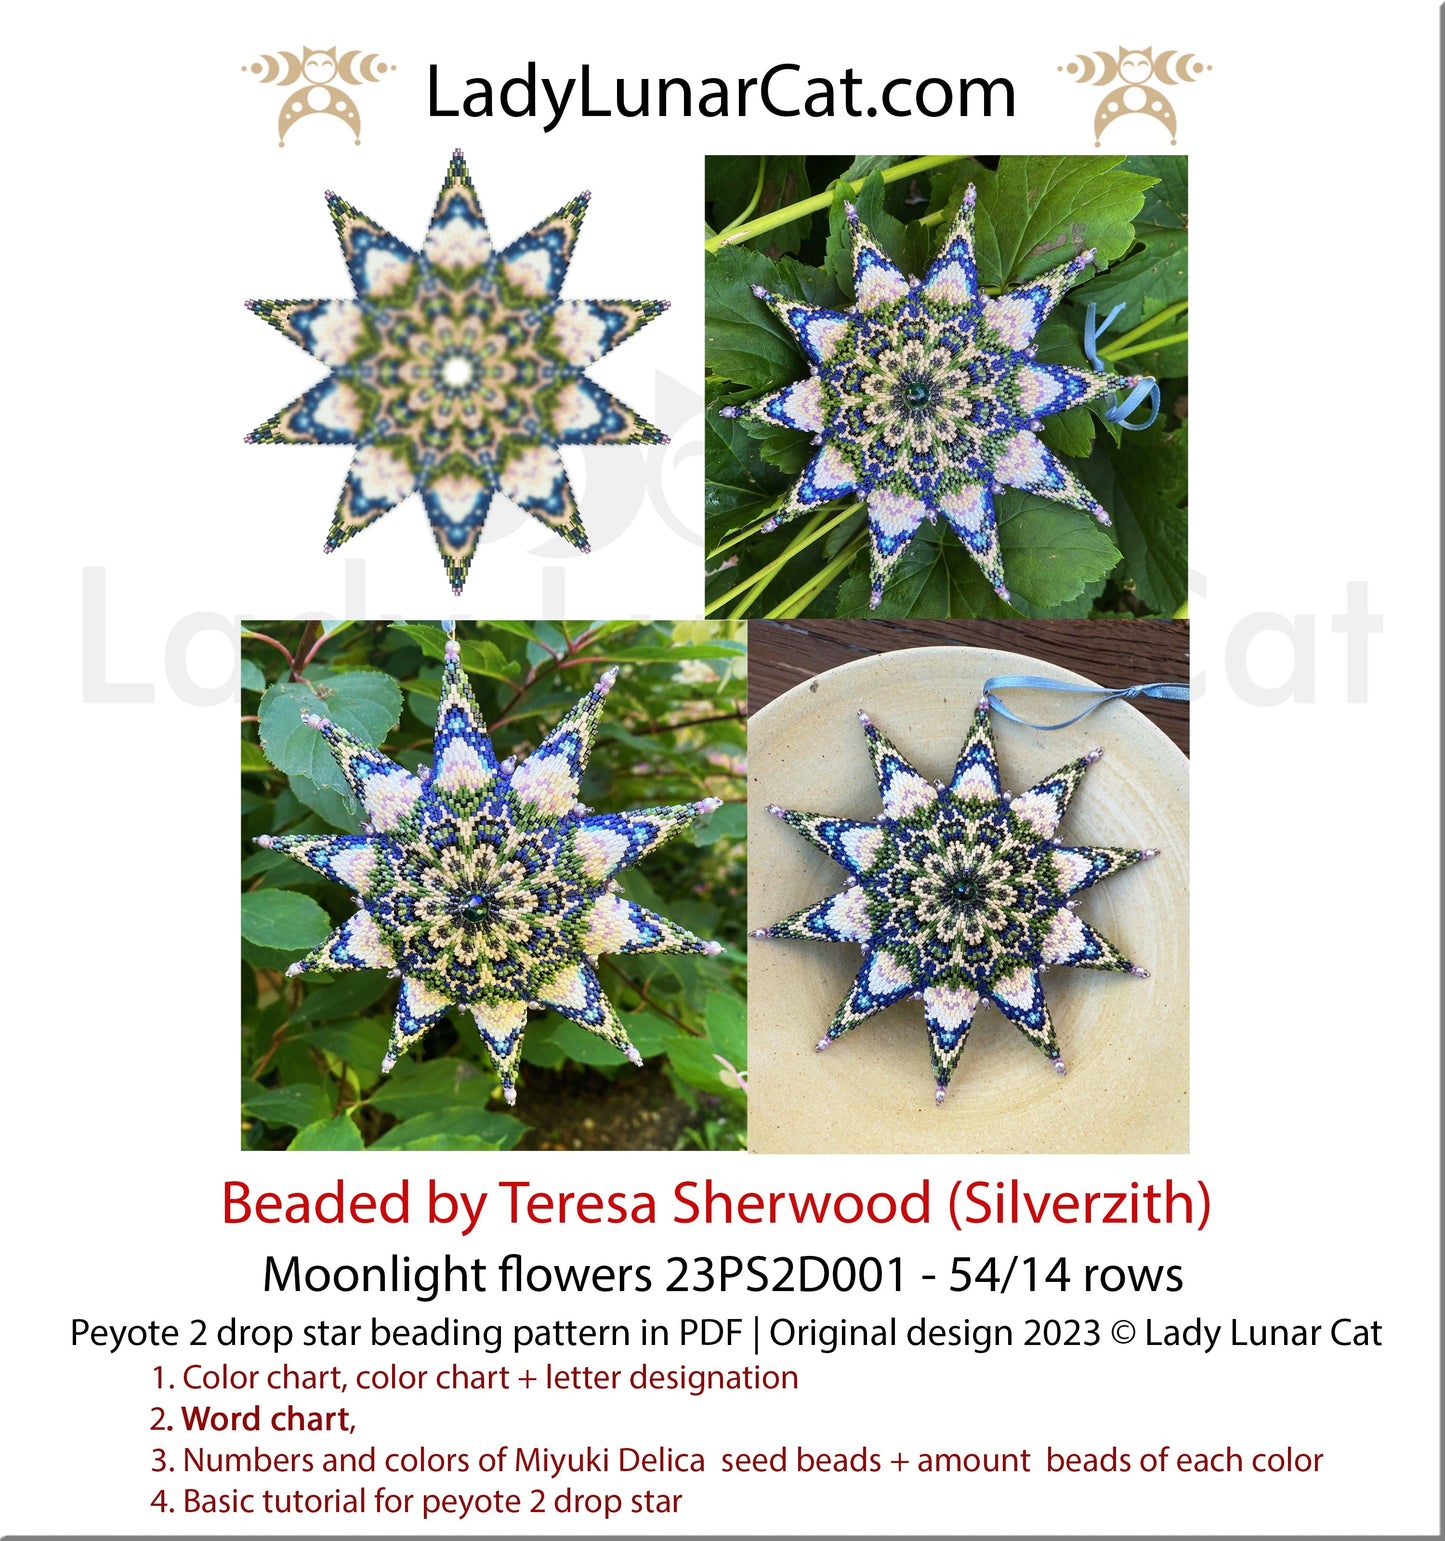 Peyote 2 drop star pattern for beading - Moonlight flowers 23PS2D001 14 rows + Basic star 2 drop LadyLunarCat